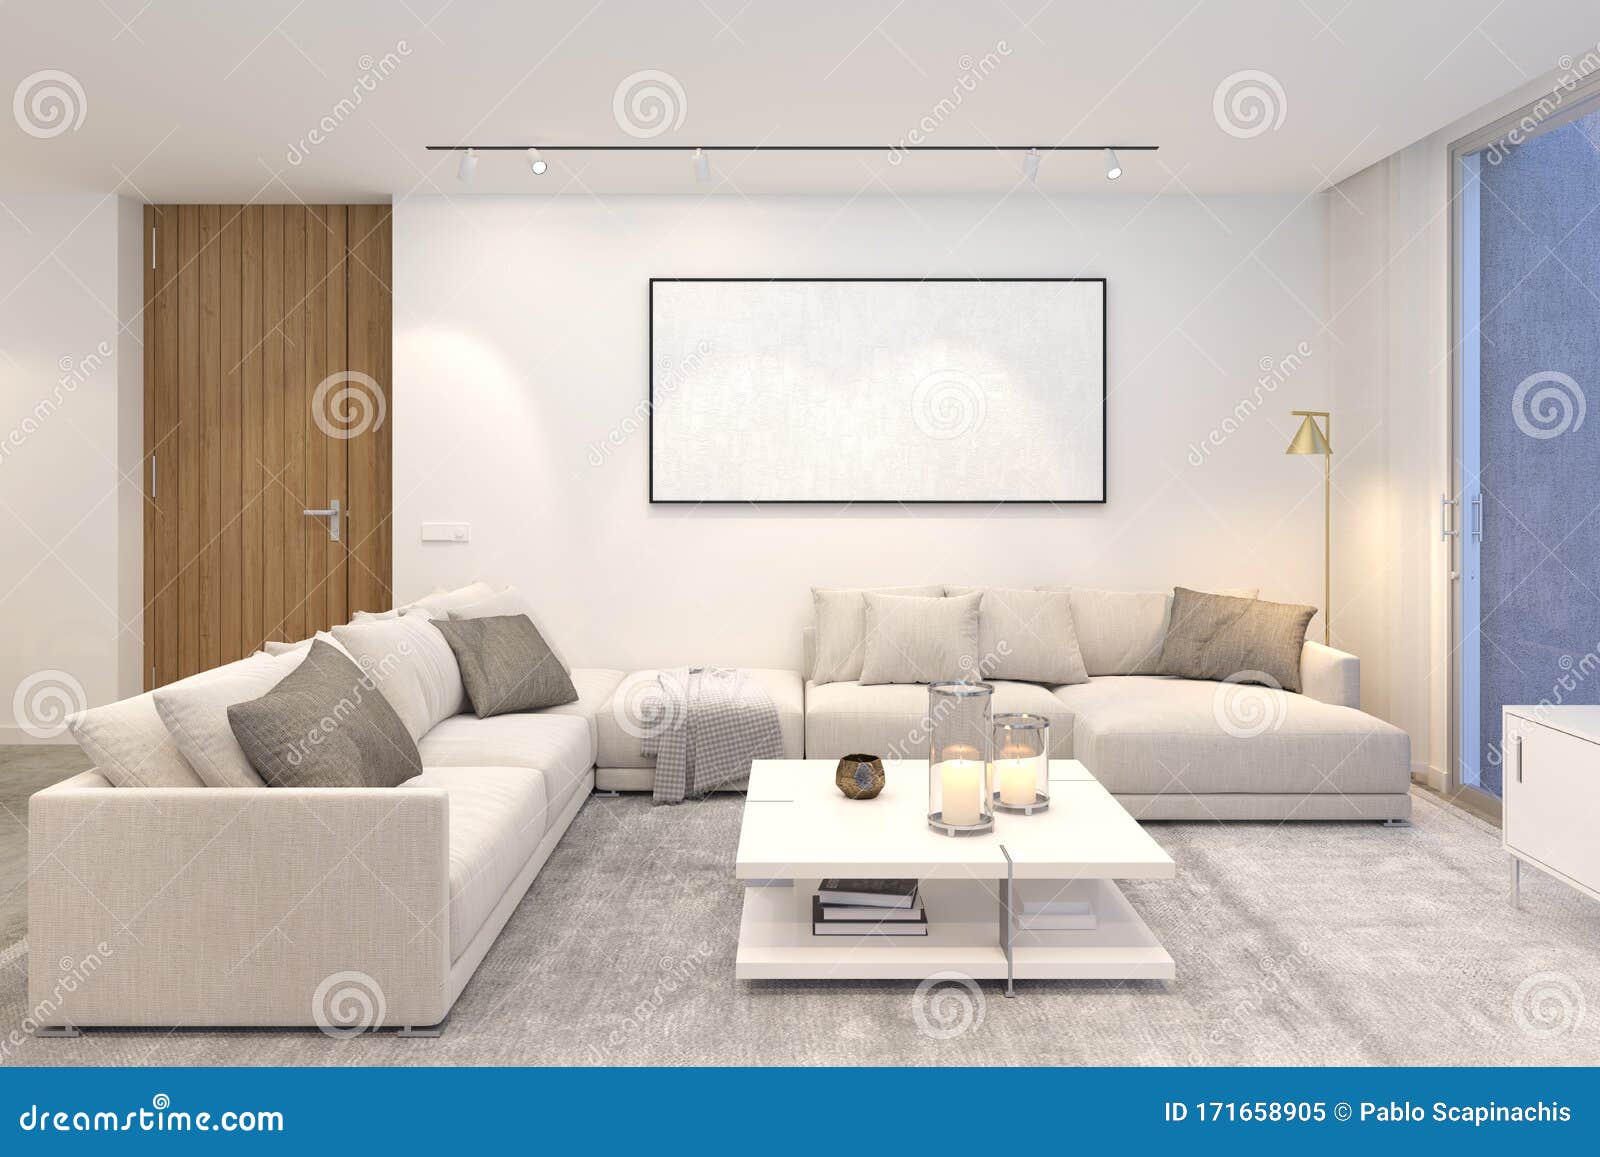 Contemporary Interior Design Living Room 20d Render Stock ...